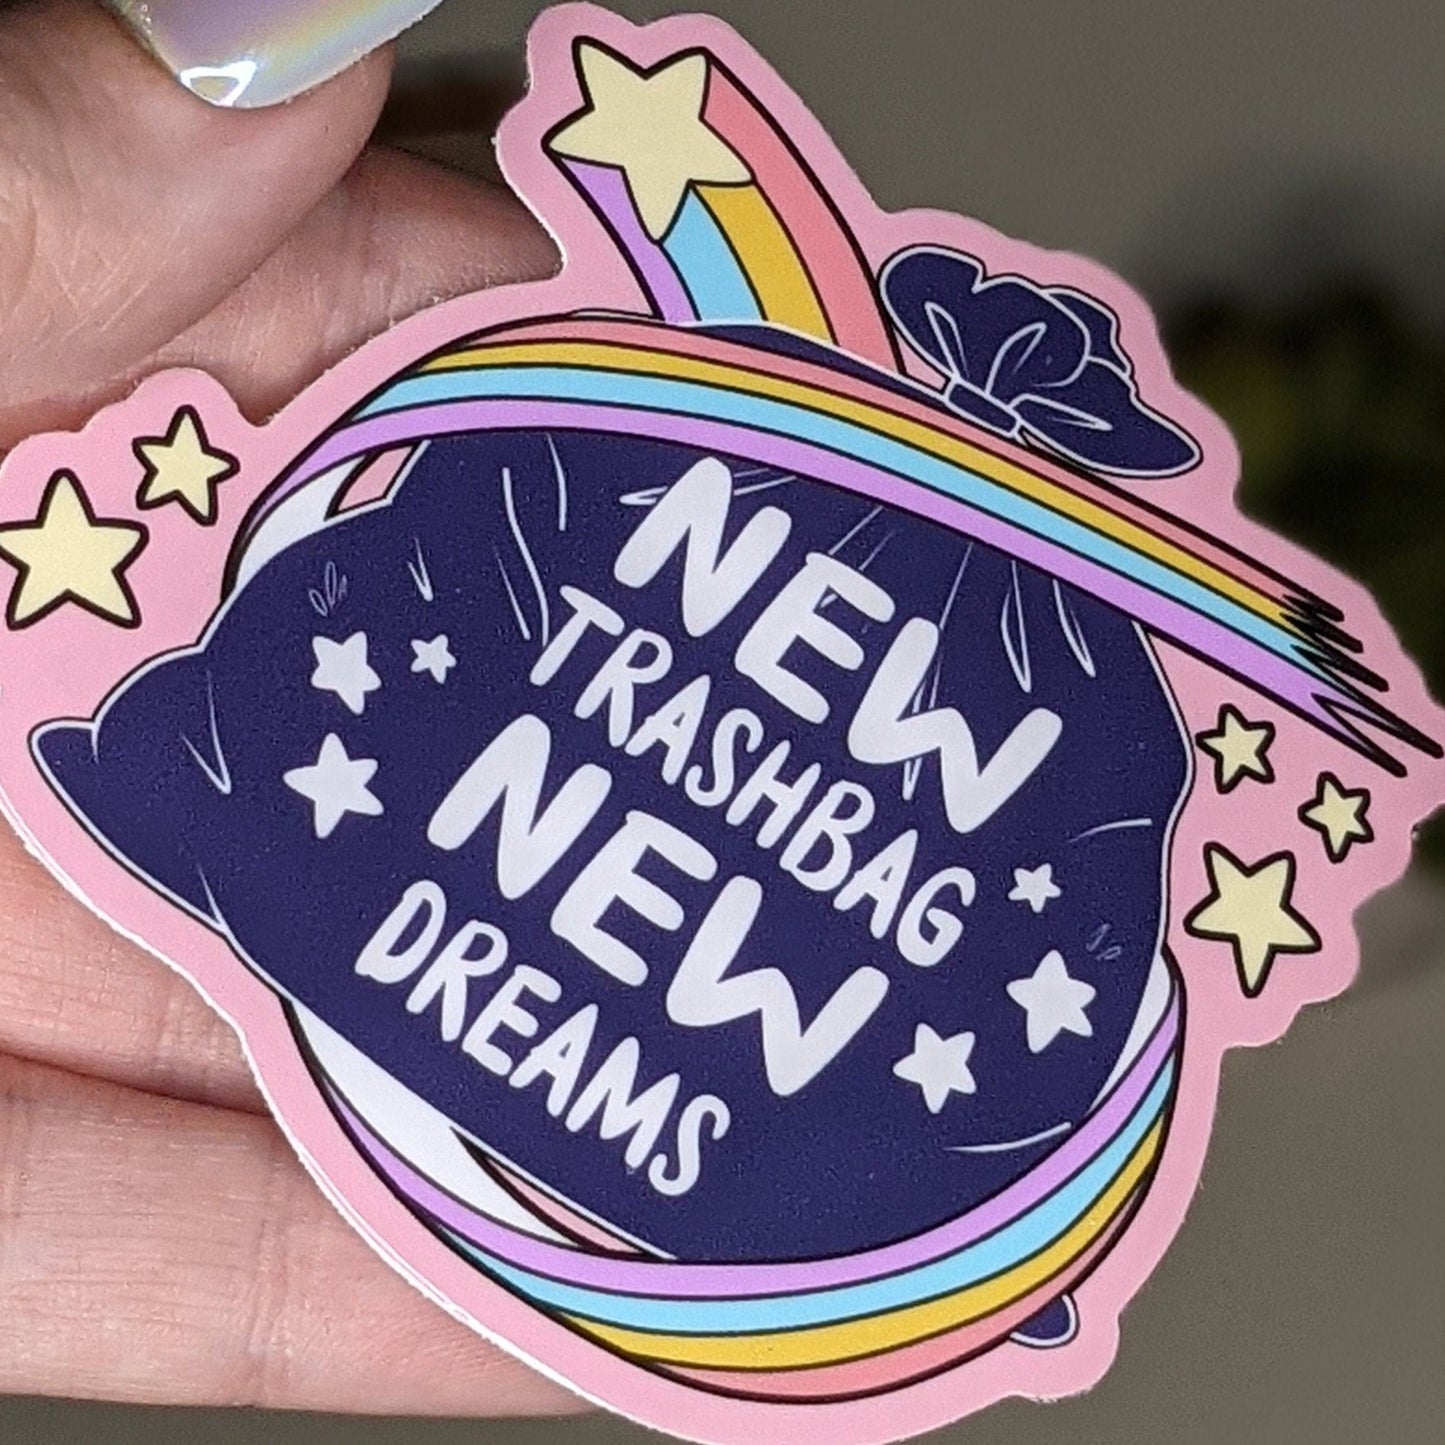 New Trash Bag New Dreams Sticker